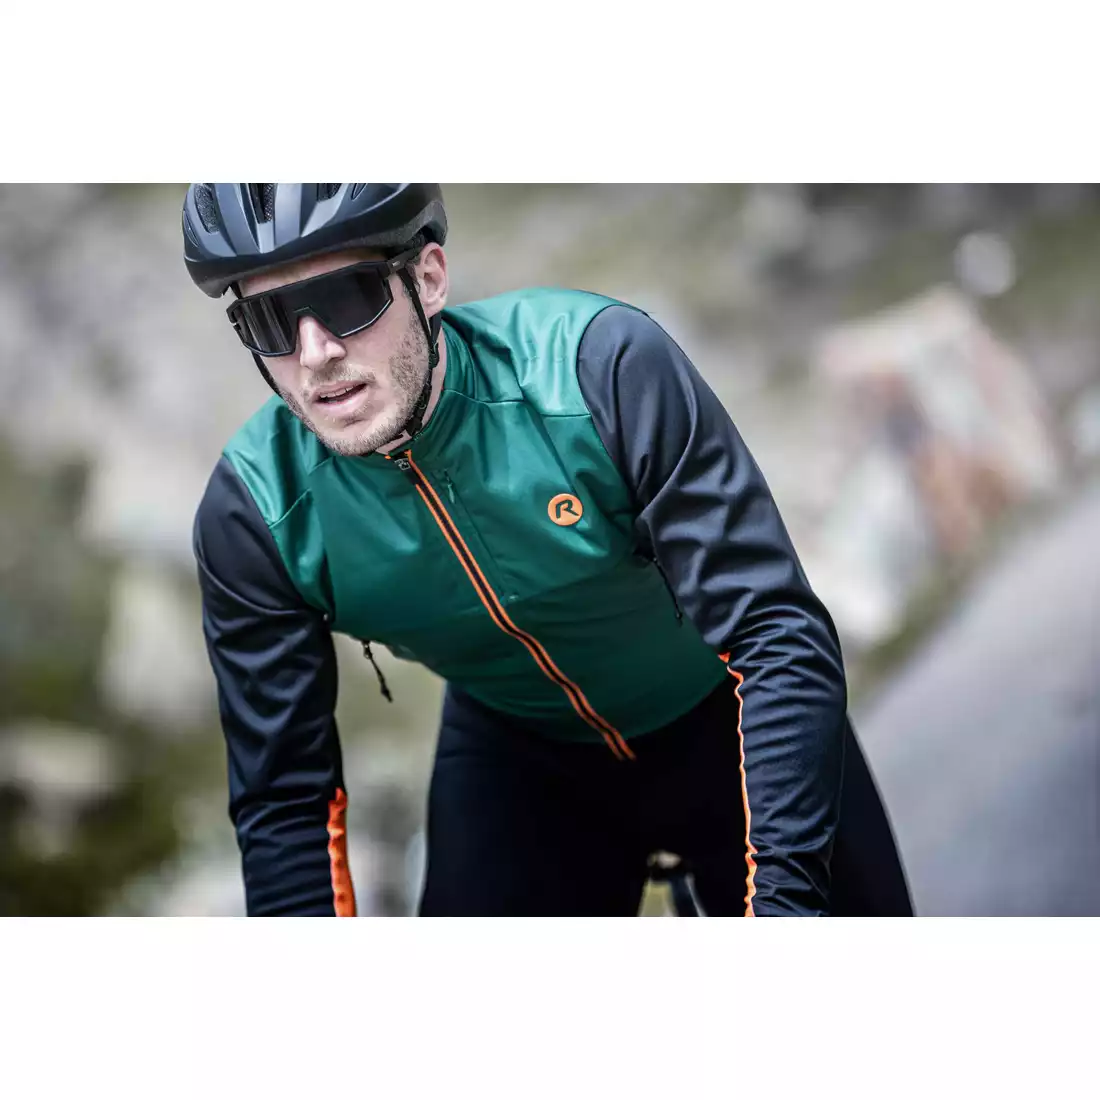 ROGELLI CADENCE men's winter cycling jacket green-orange